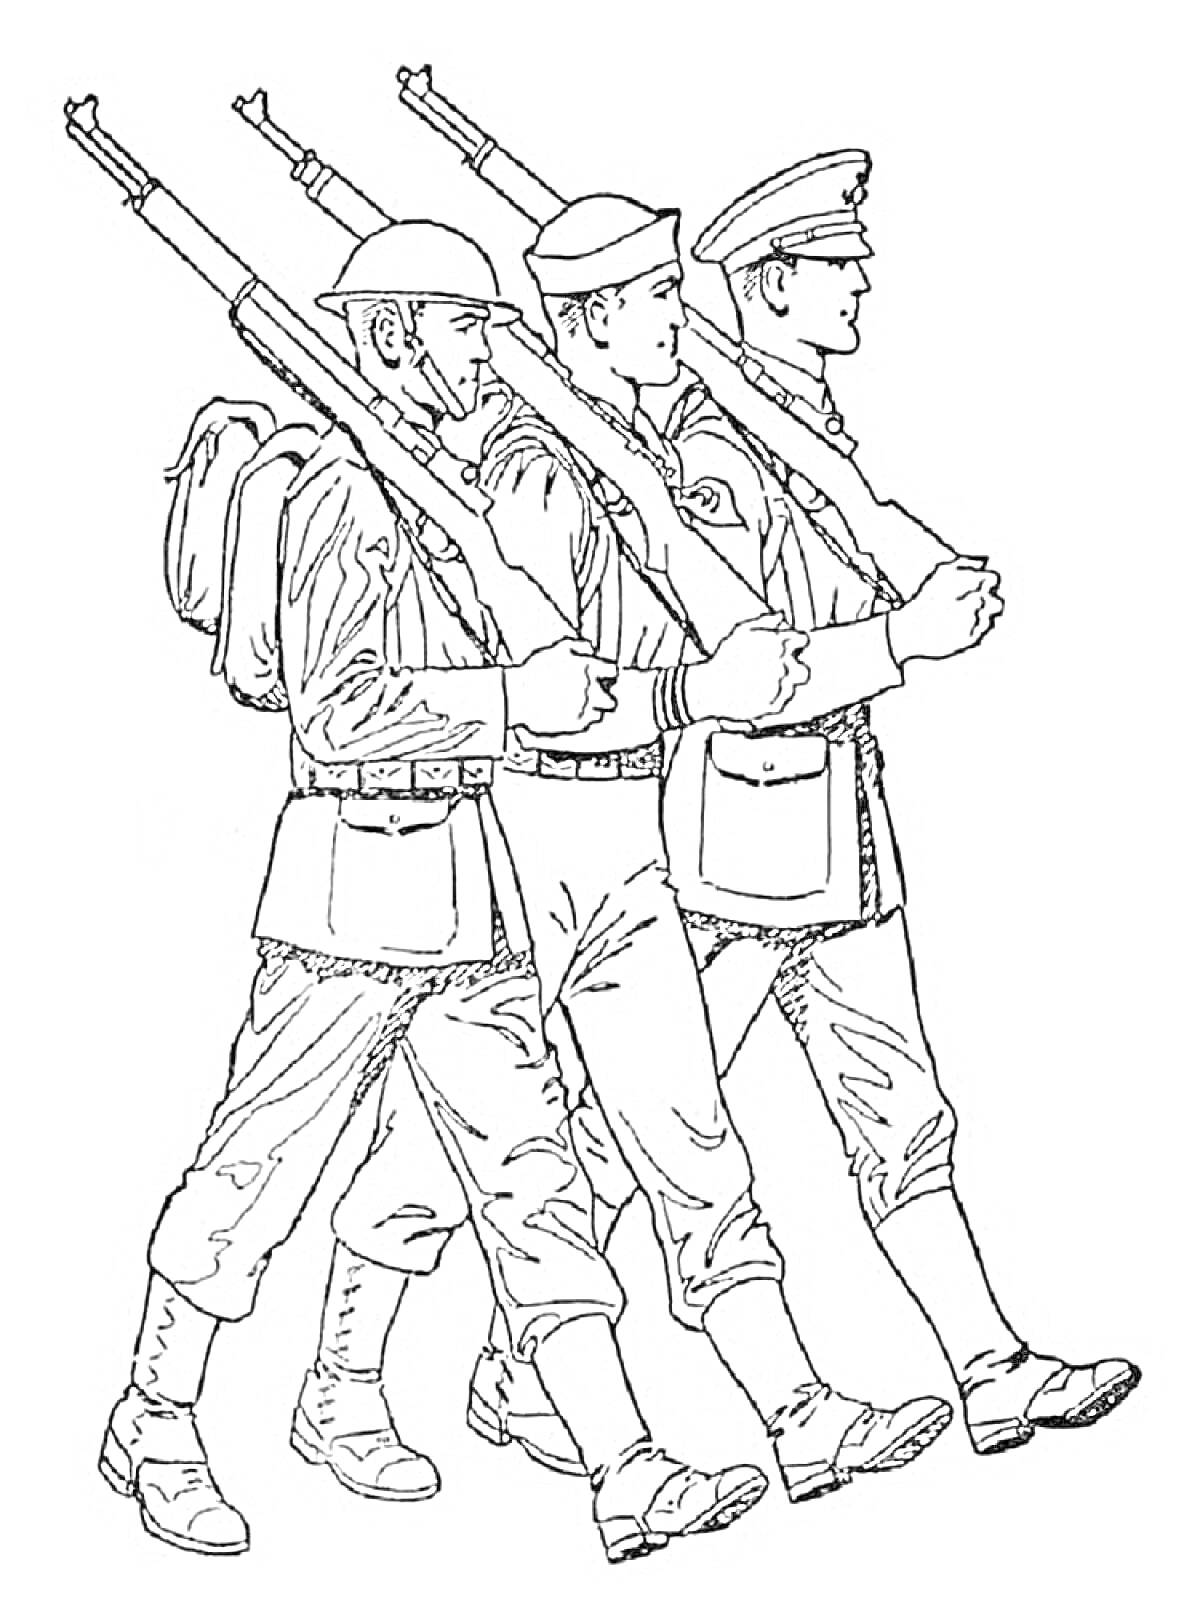 Три шагающих солдата с винтовками на плечах